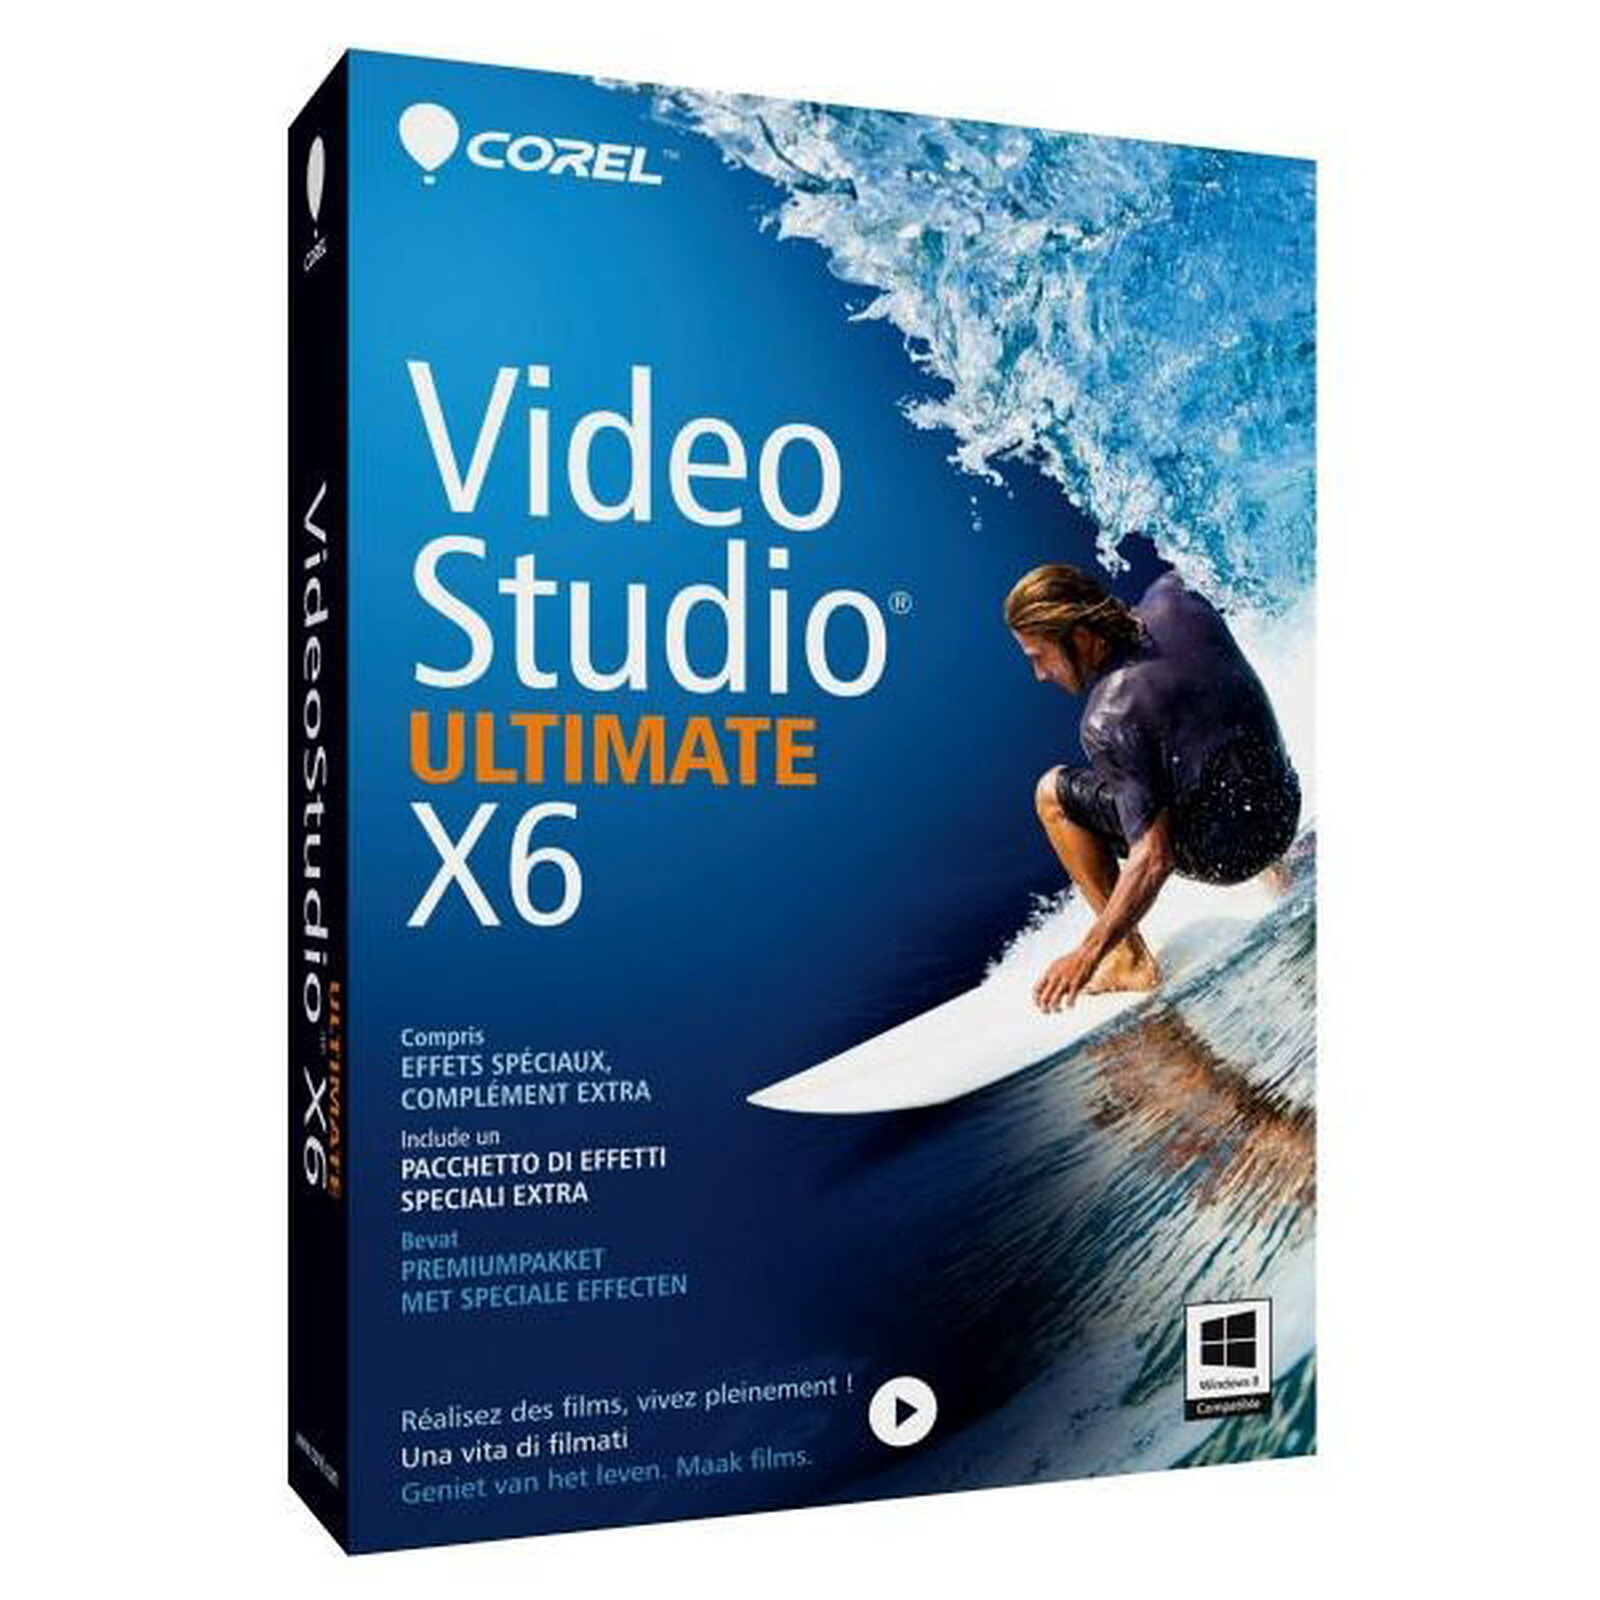 corel videostudio pro x6 help